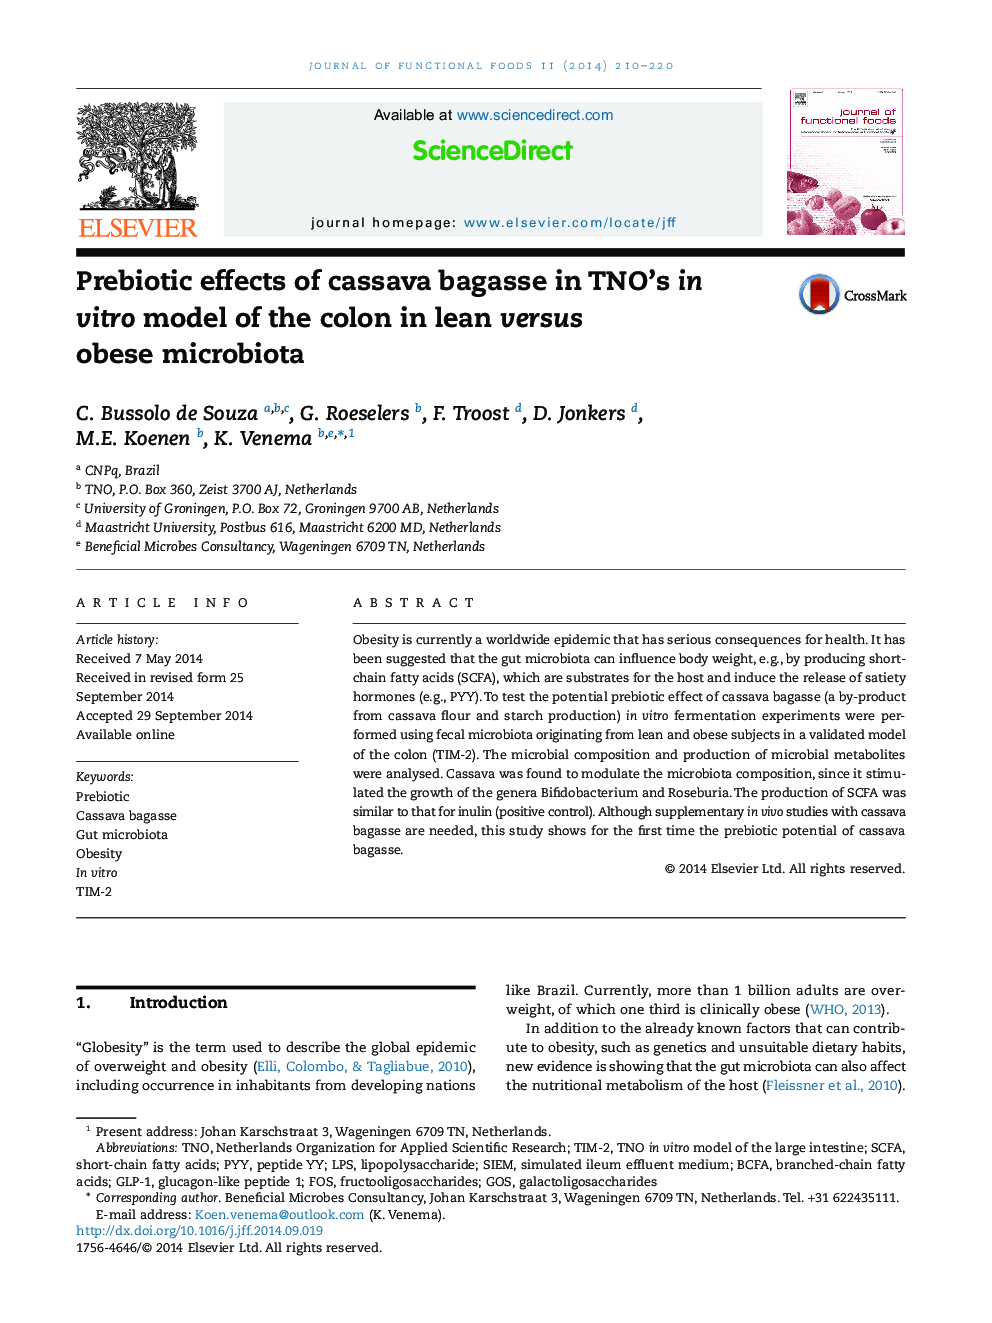 Prebiotic effects of cassava bagasse in TNO's in vitro model of the colon in lean versus obese microbiota